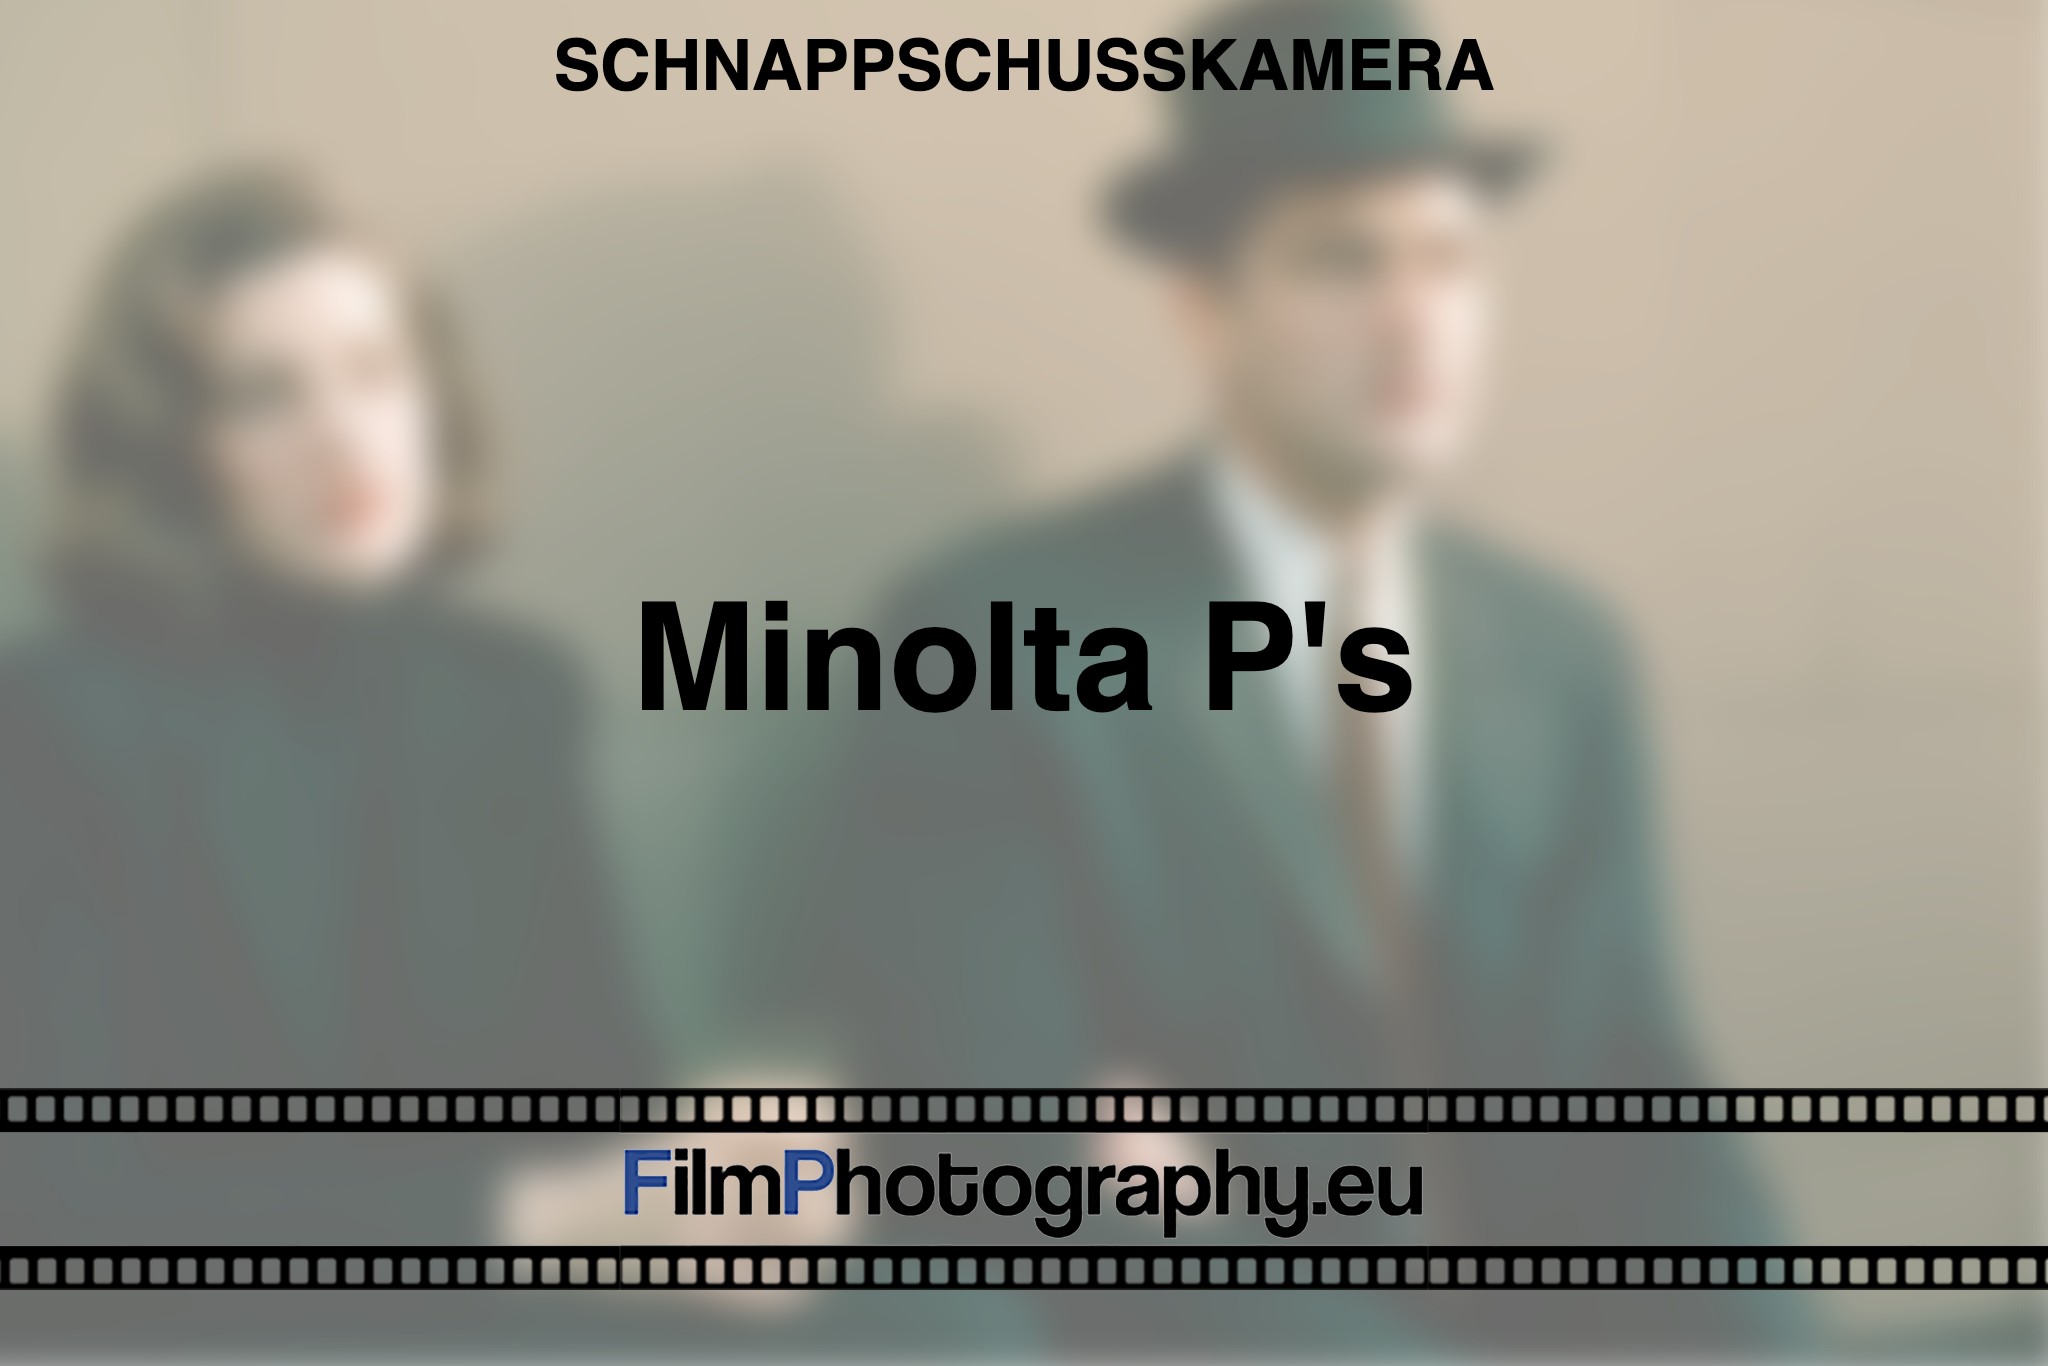 minolta-p's-schnappschusskamera-bnv